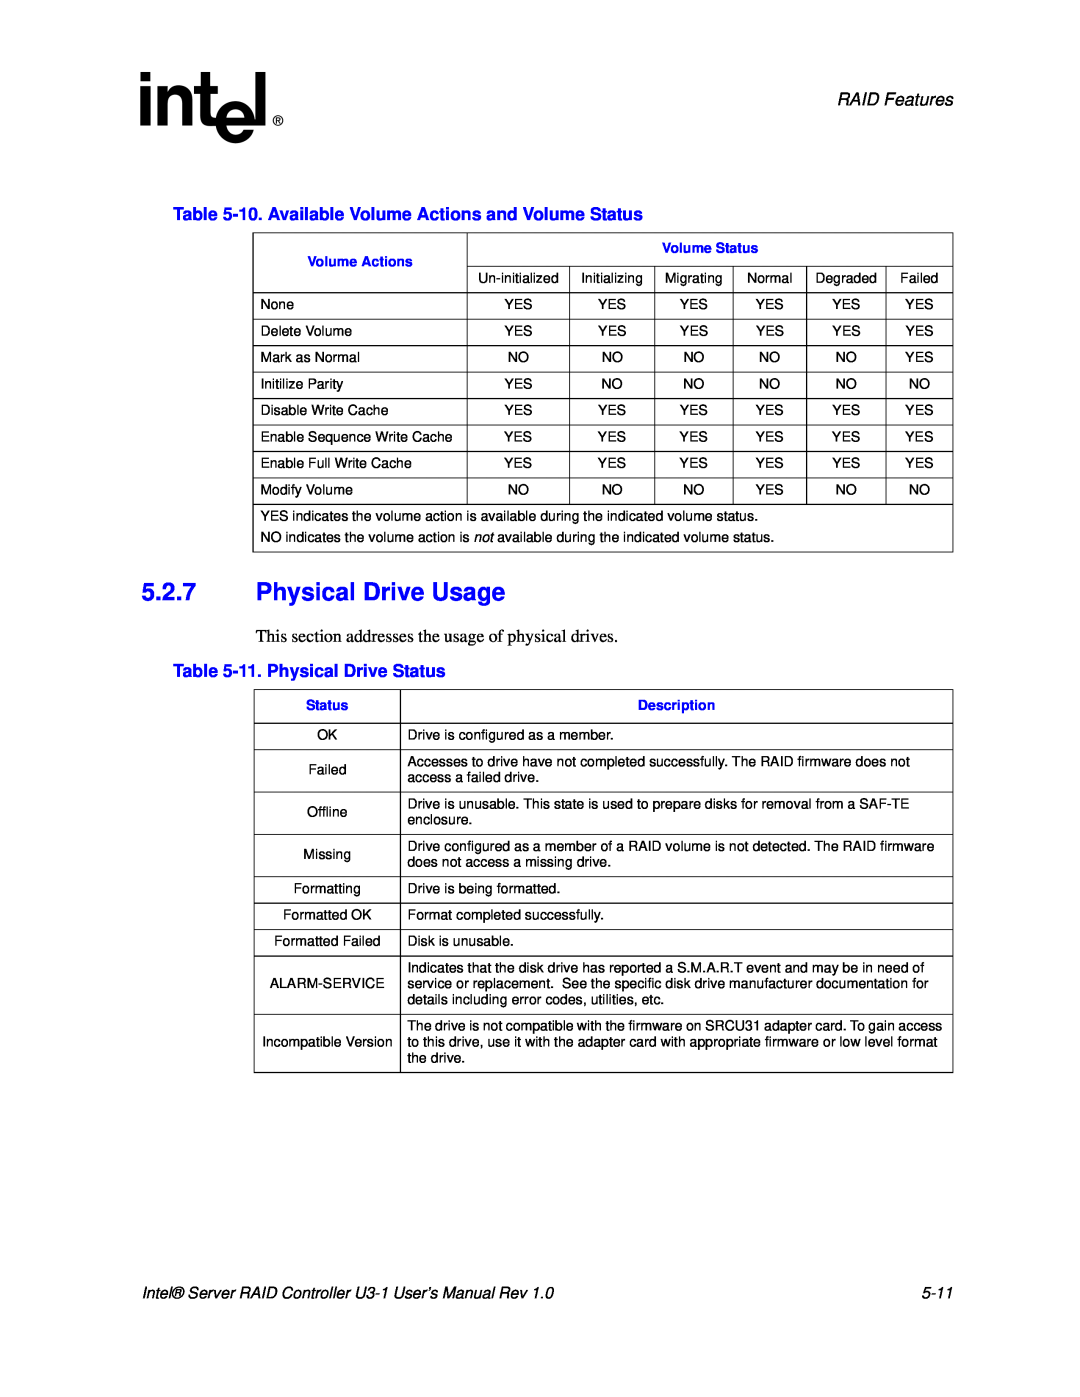 Intel SRCU31 user manual 5.2.7Physical Drive Usage, RAID Features, 11.Physical Drive Status, 5-11 